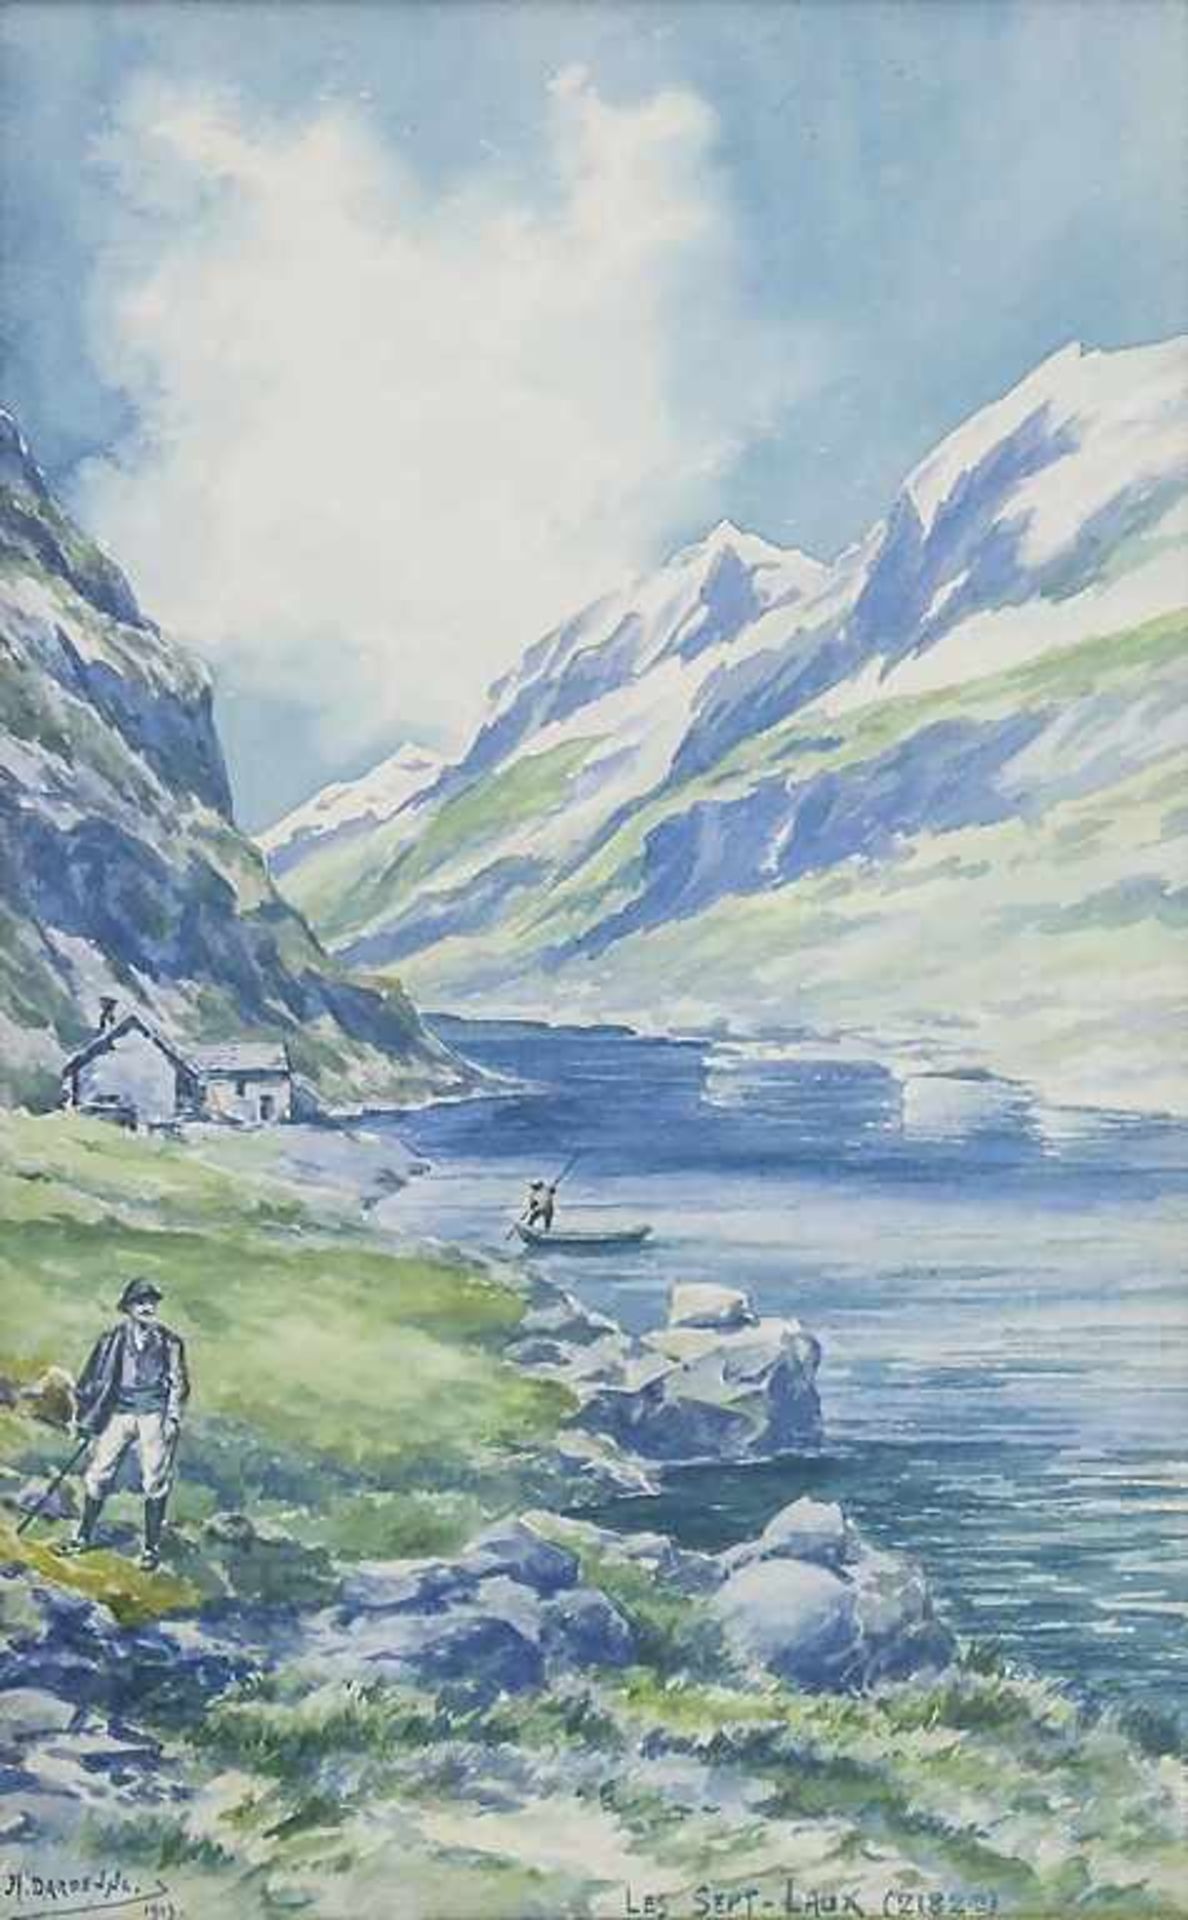 Les Sept-Laux/Mountain Lake, H. Dardenne, 1913 Aquarell/Papier. Bergsee mit Figurenstaffage. Li.